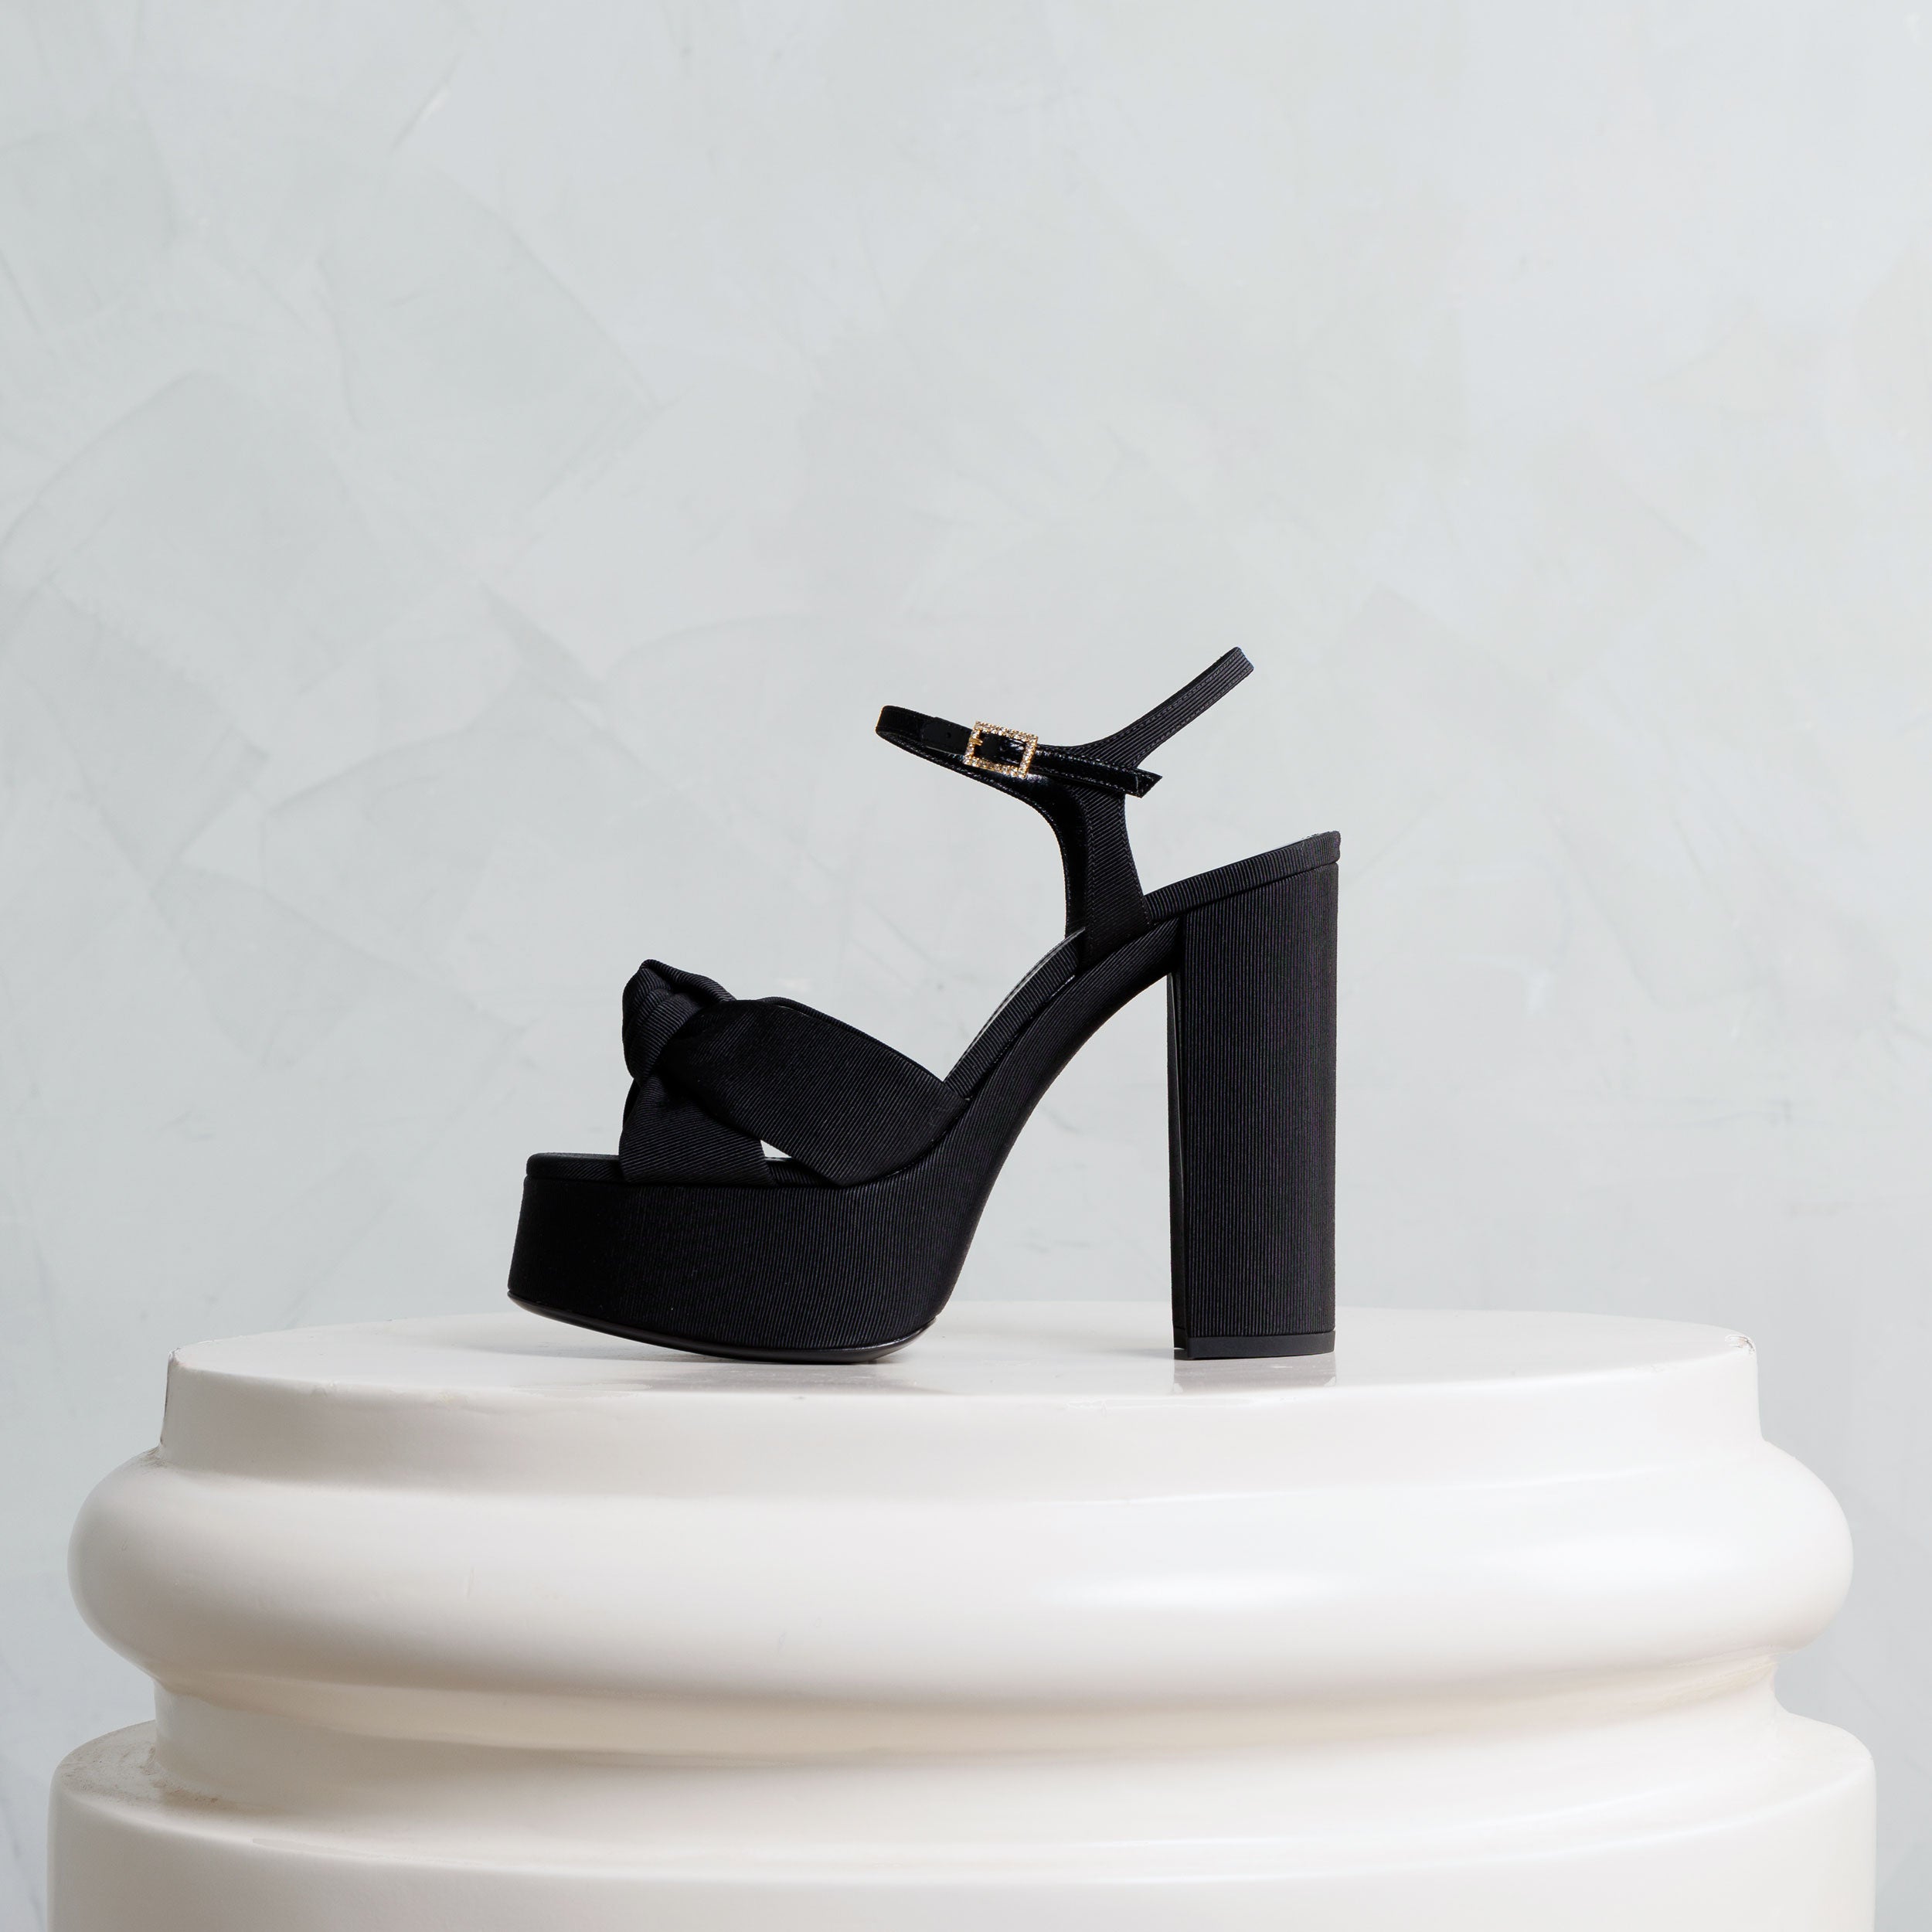 Designer Shoes for Women: Heels, Slides, Sneakers, Shoes